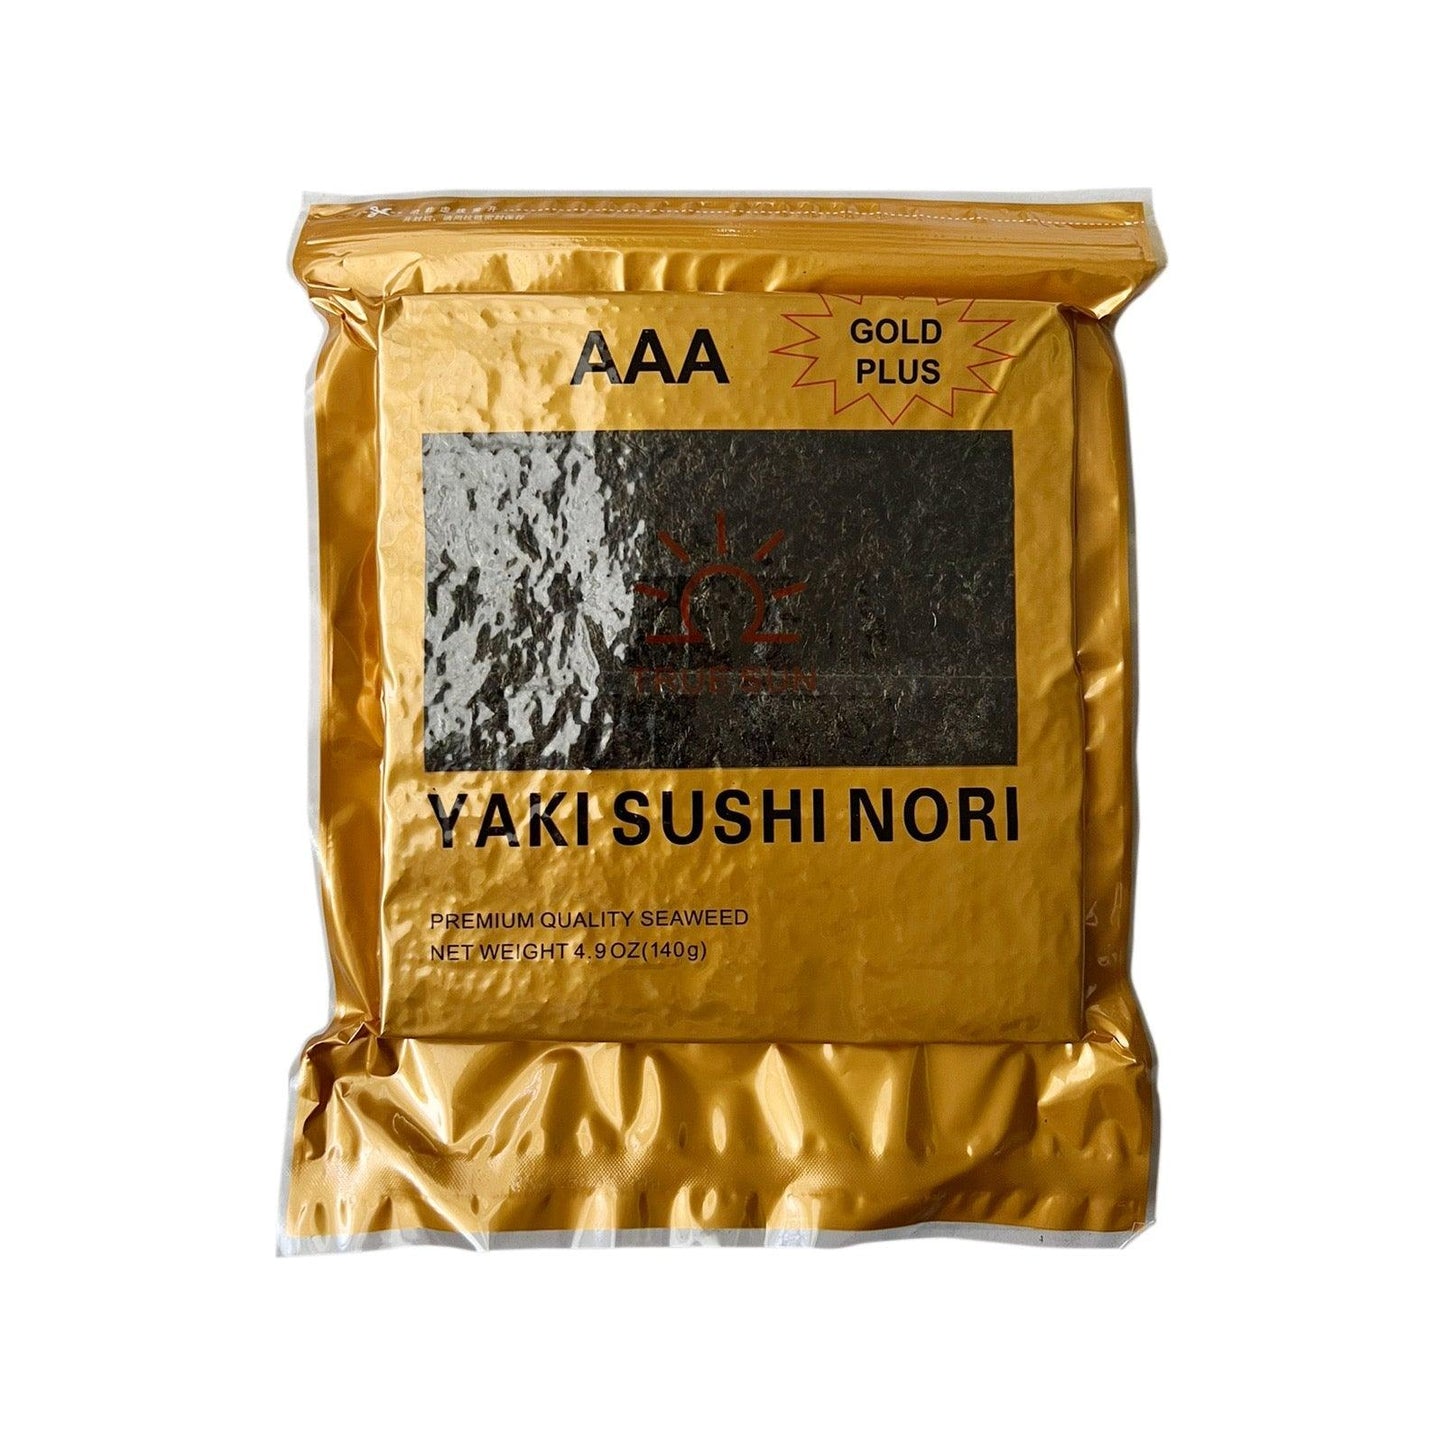 Gold PLUS AAA Buy MORE get MORE FREE True Sun Sushi Nori Gold PlusHalf cut, 100 pieces/bag, 10 bags/box - True Sun